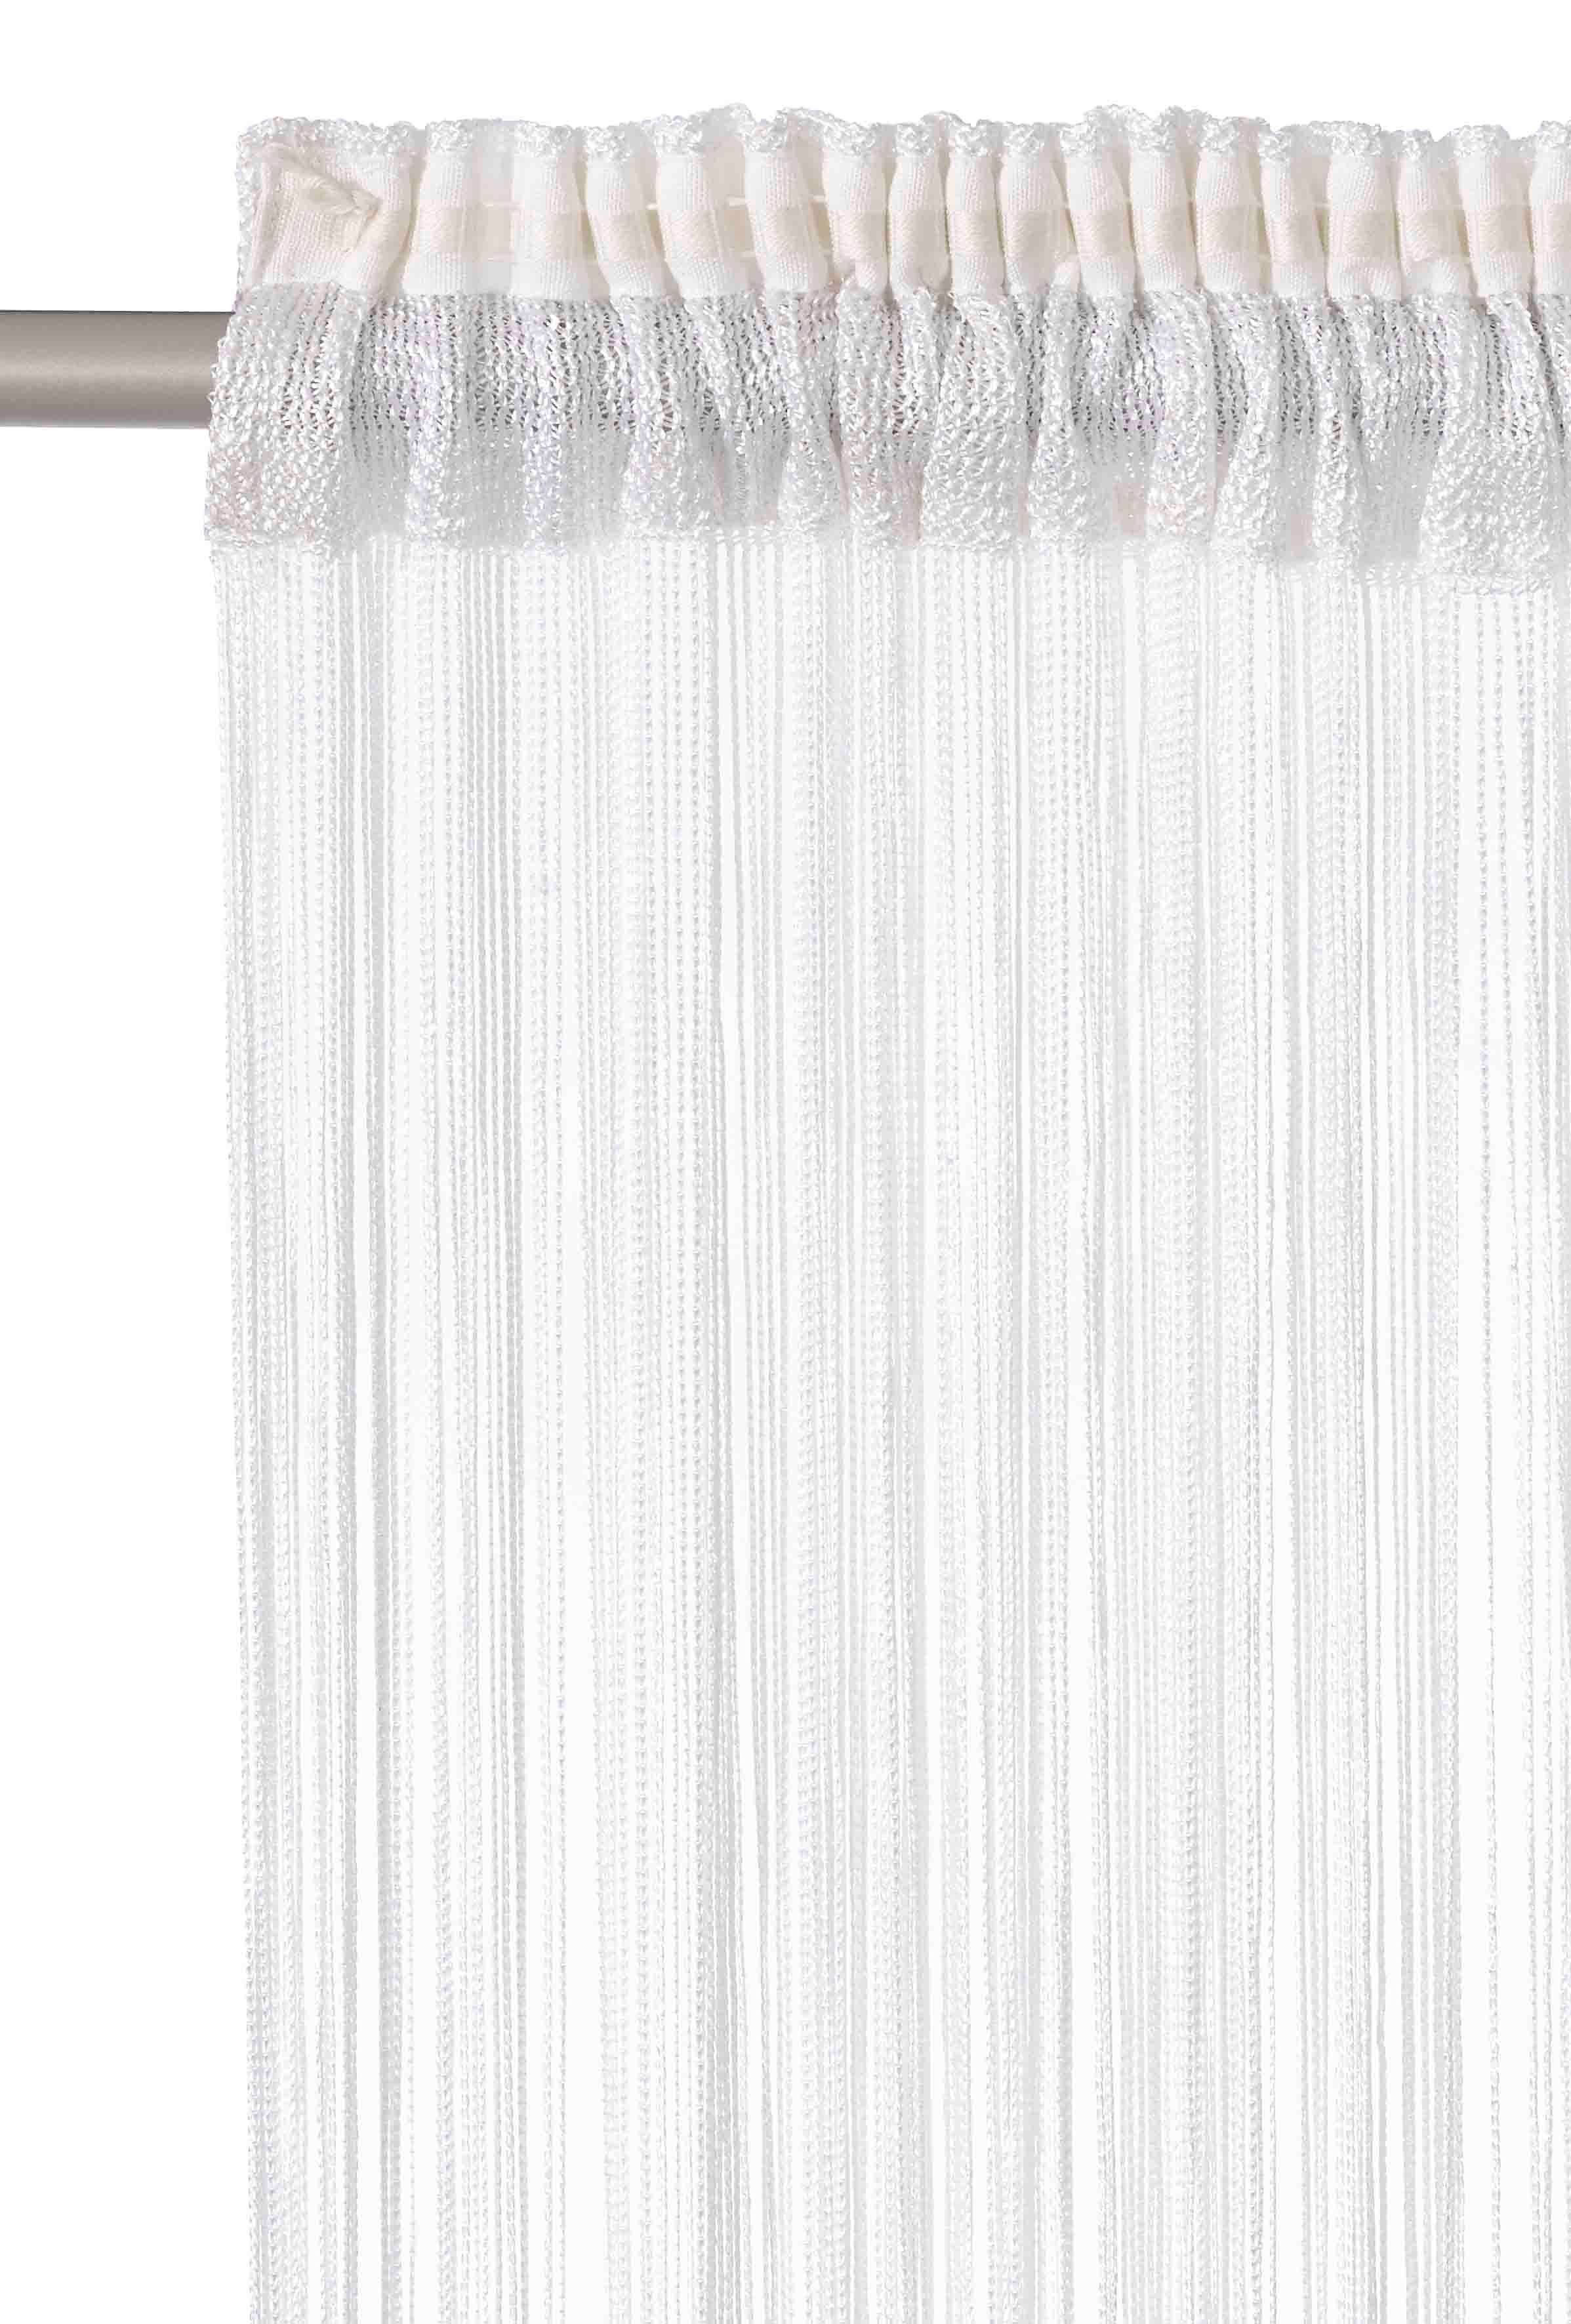 Fadenvorhang Fao-Uni, my home, Stangendurchzug St), weiß pflegeleicht Kräuselband, multifunktional, Polyester, (1 transparent, transparent